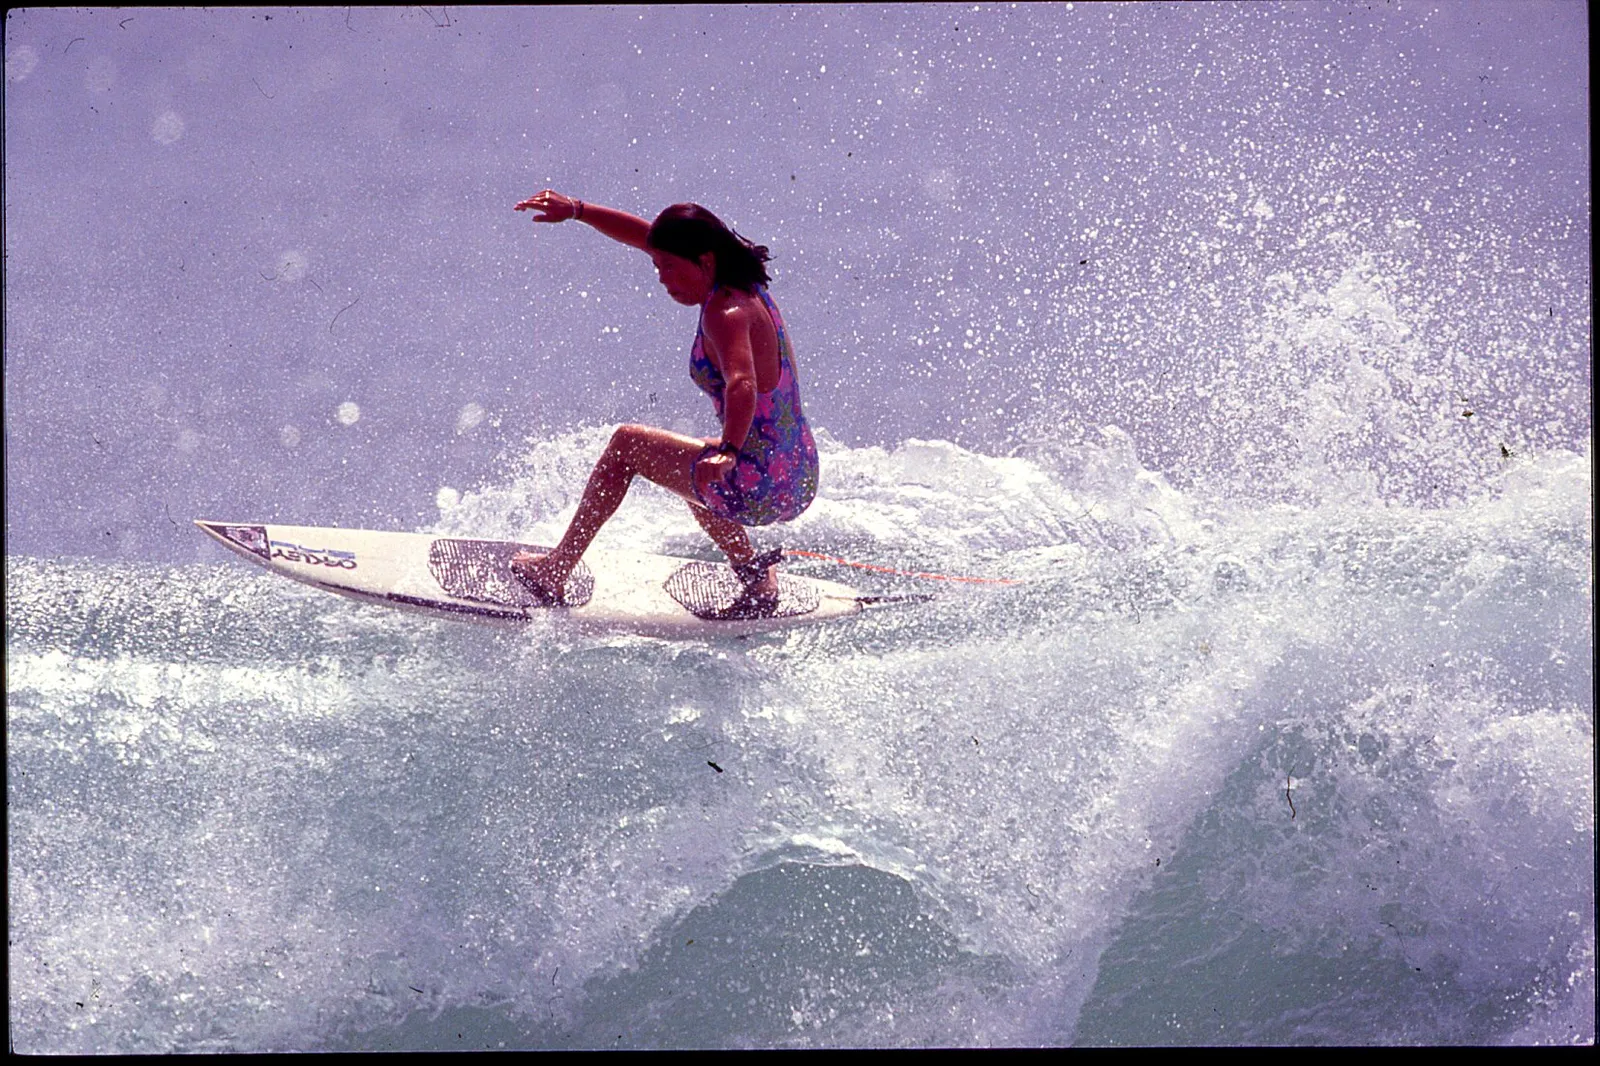 The Untold Stories of Surfing's Trailblazing Women | Smart News